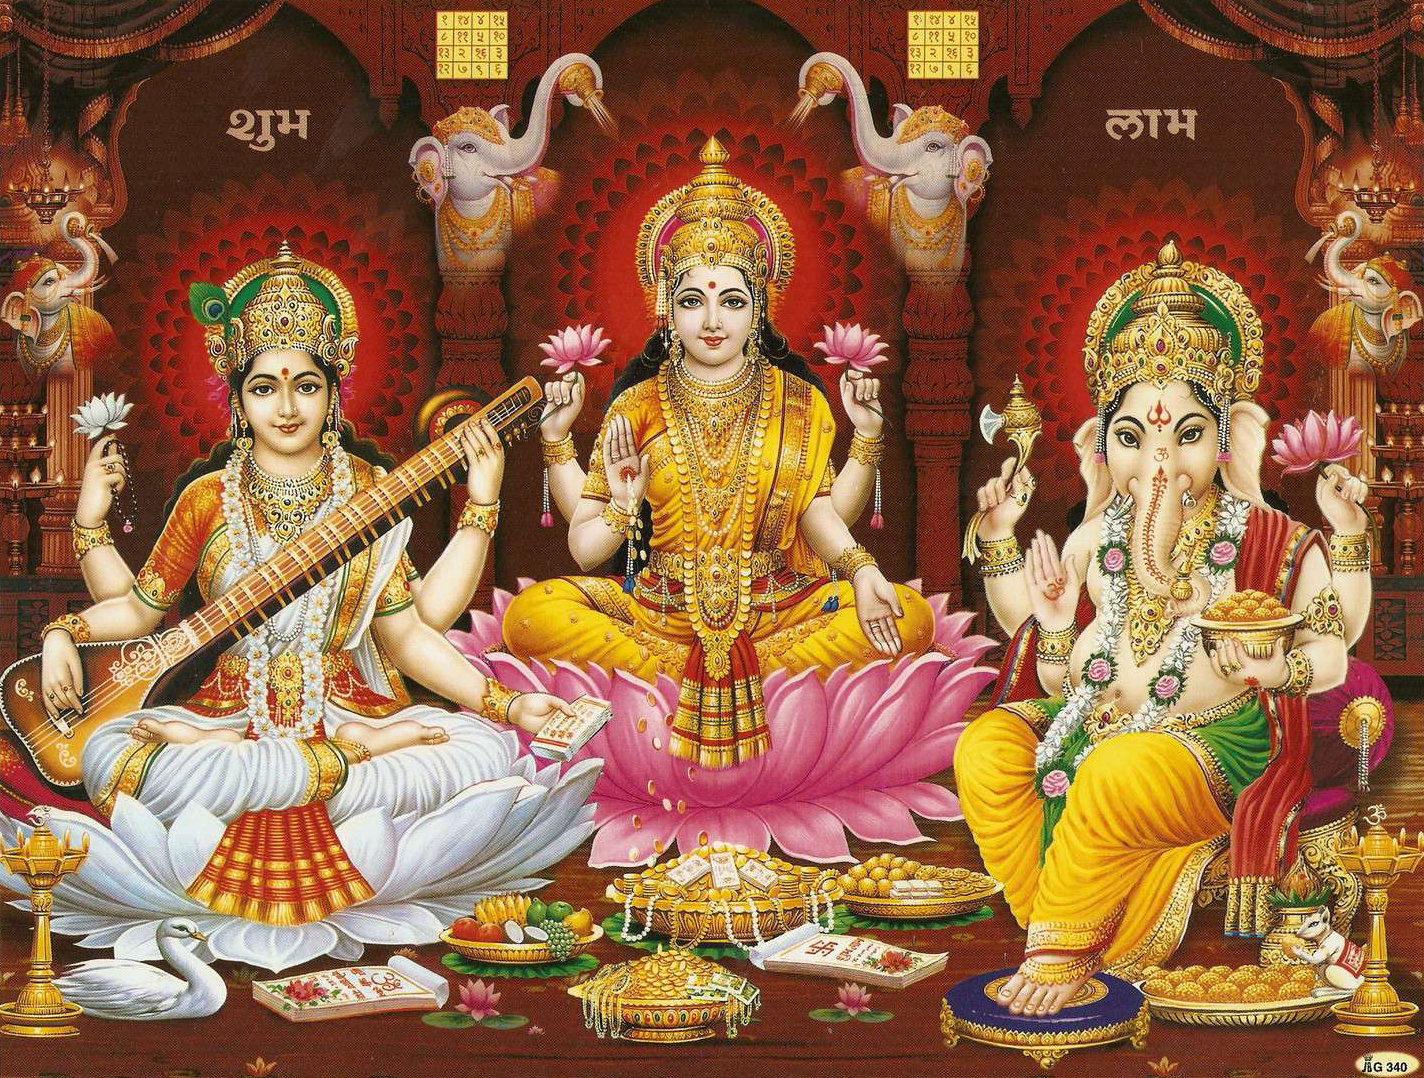 Lakshmi, Saraswati & Ganesha — The Householders Trinity